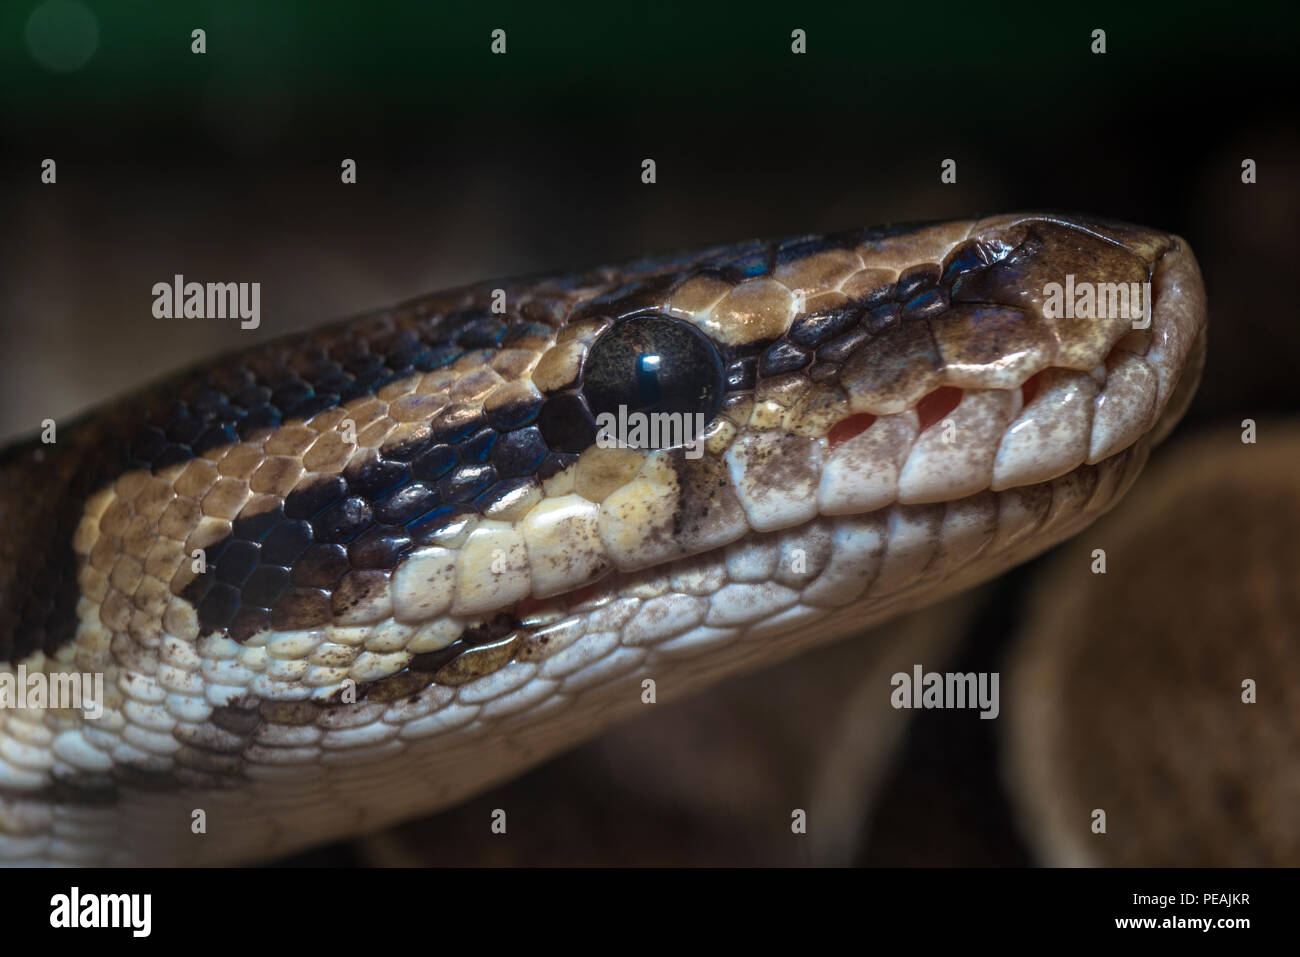 Snake head close up image taken in Panama Stock Photo